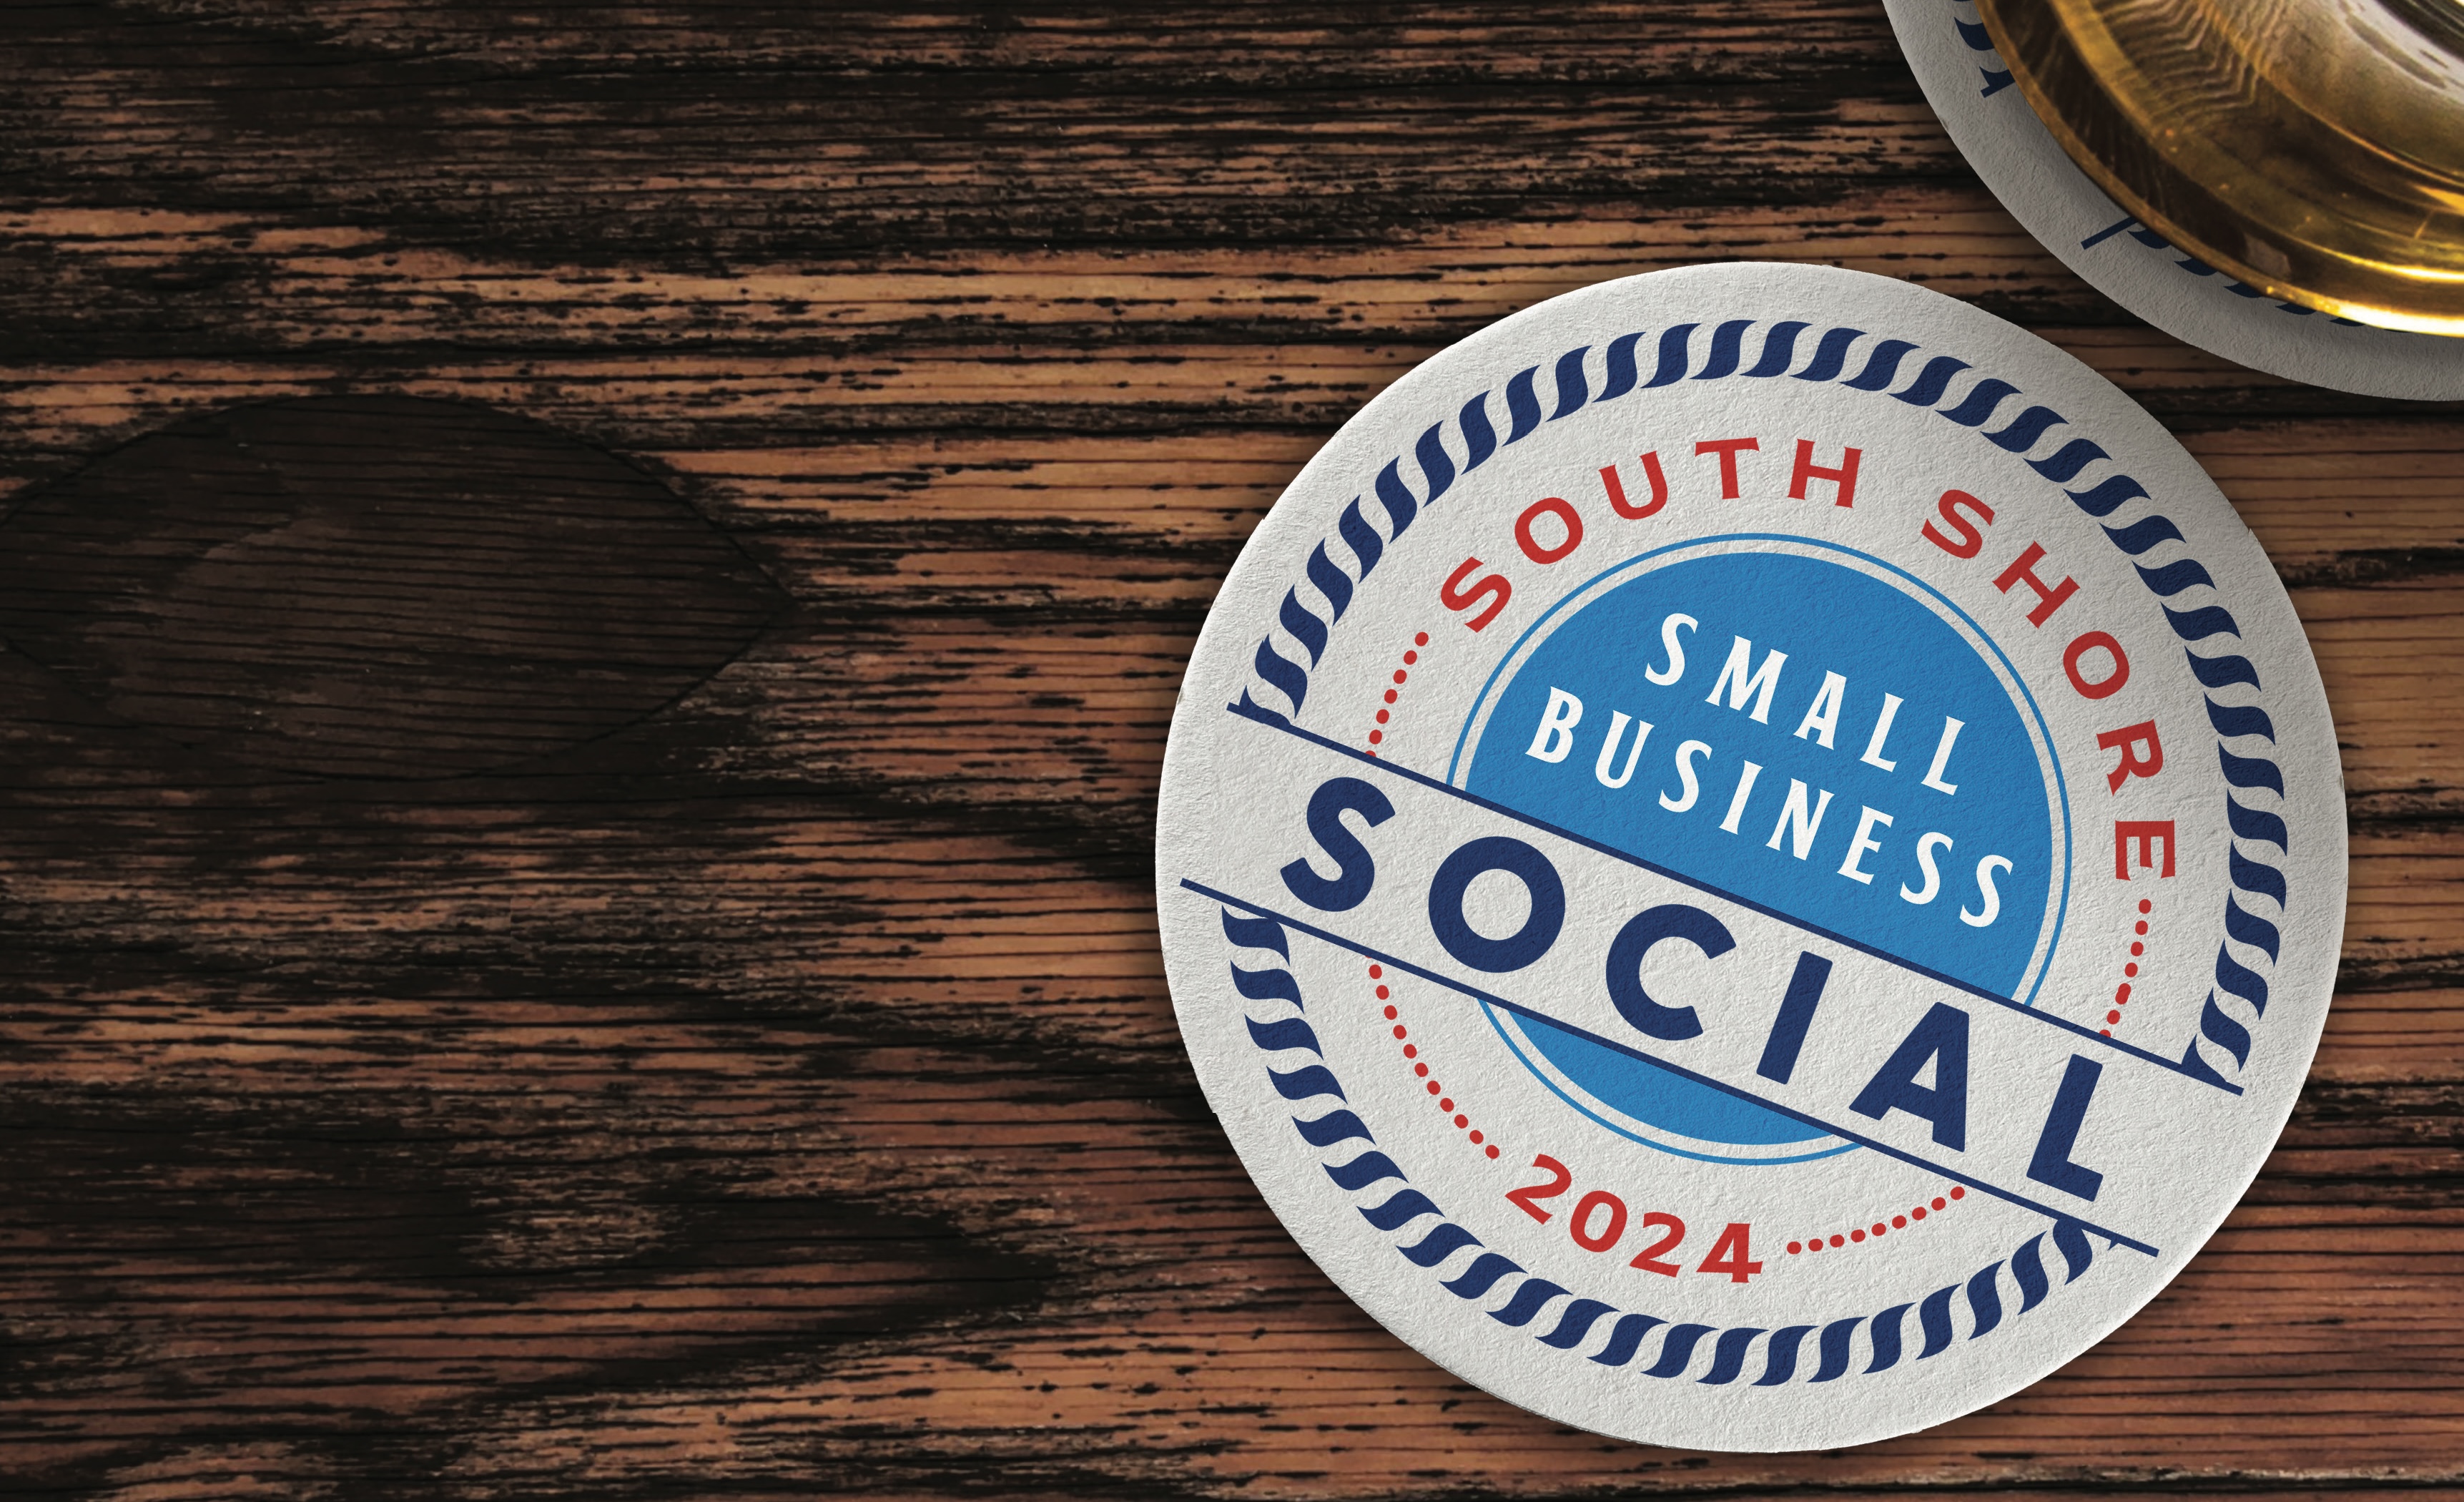 South Shore Small Business Social